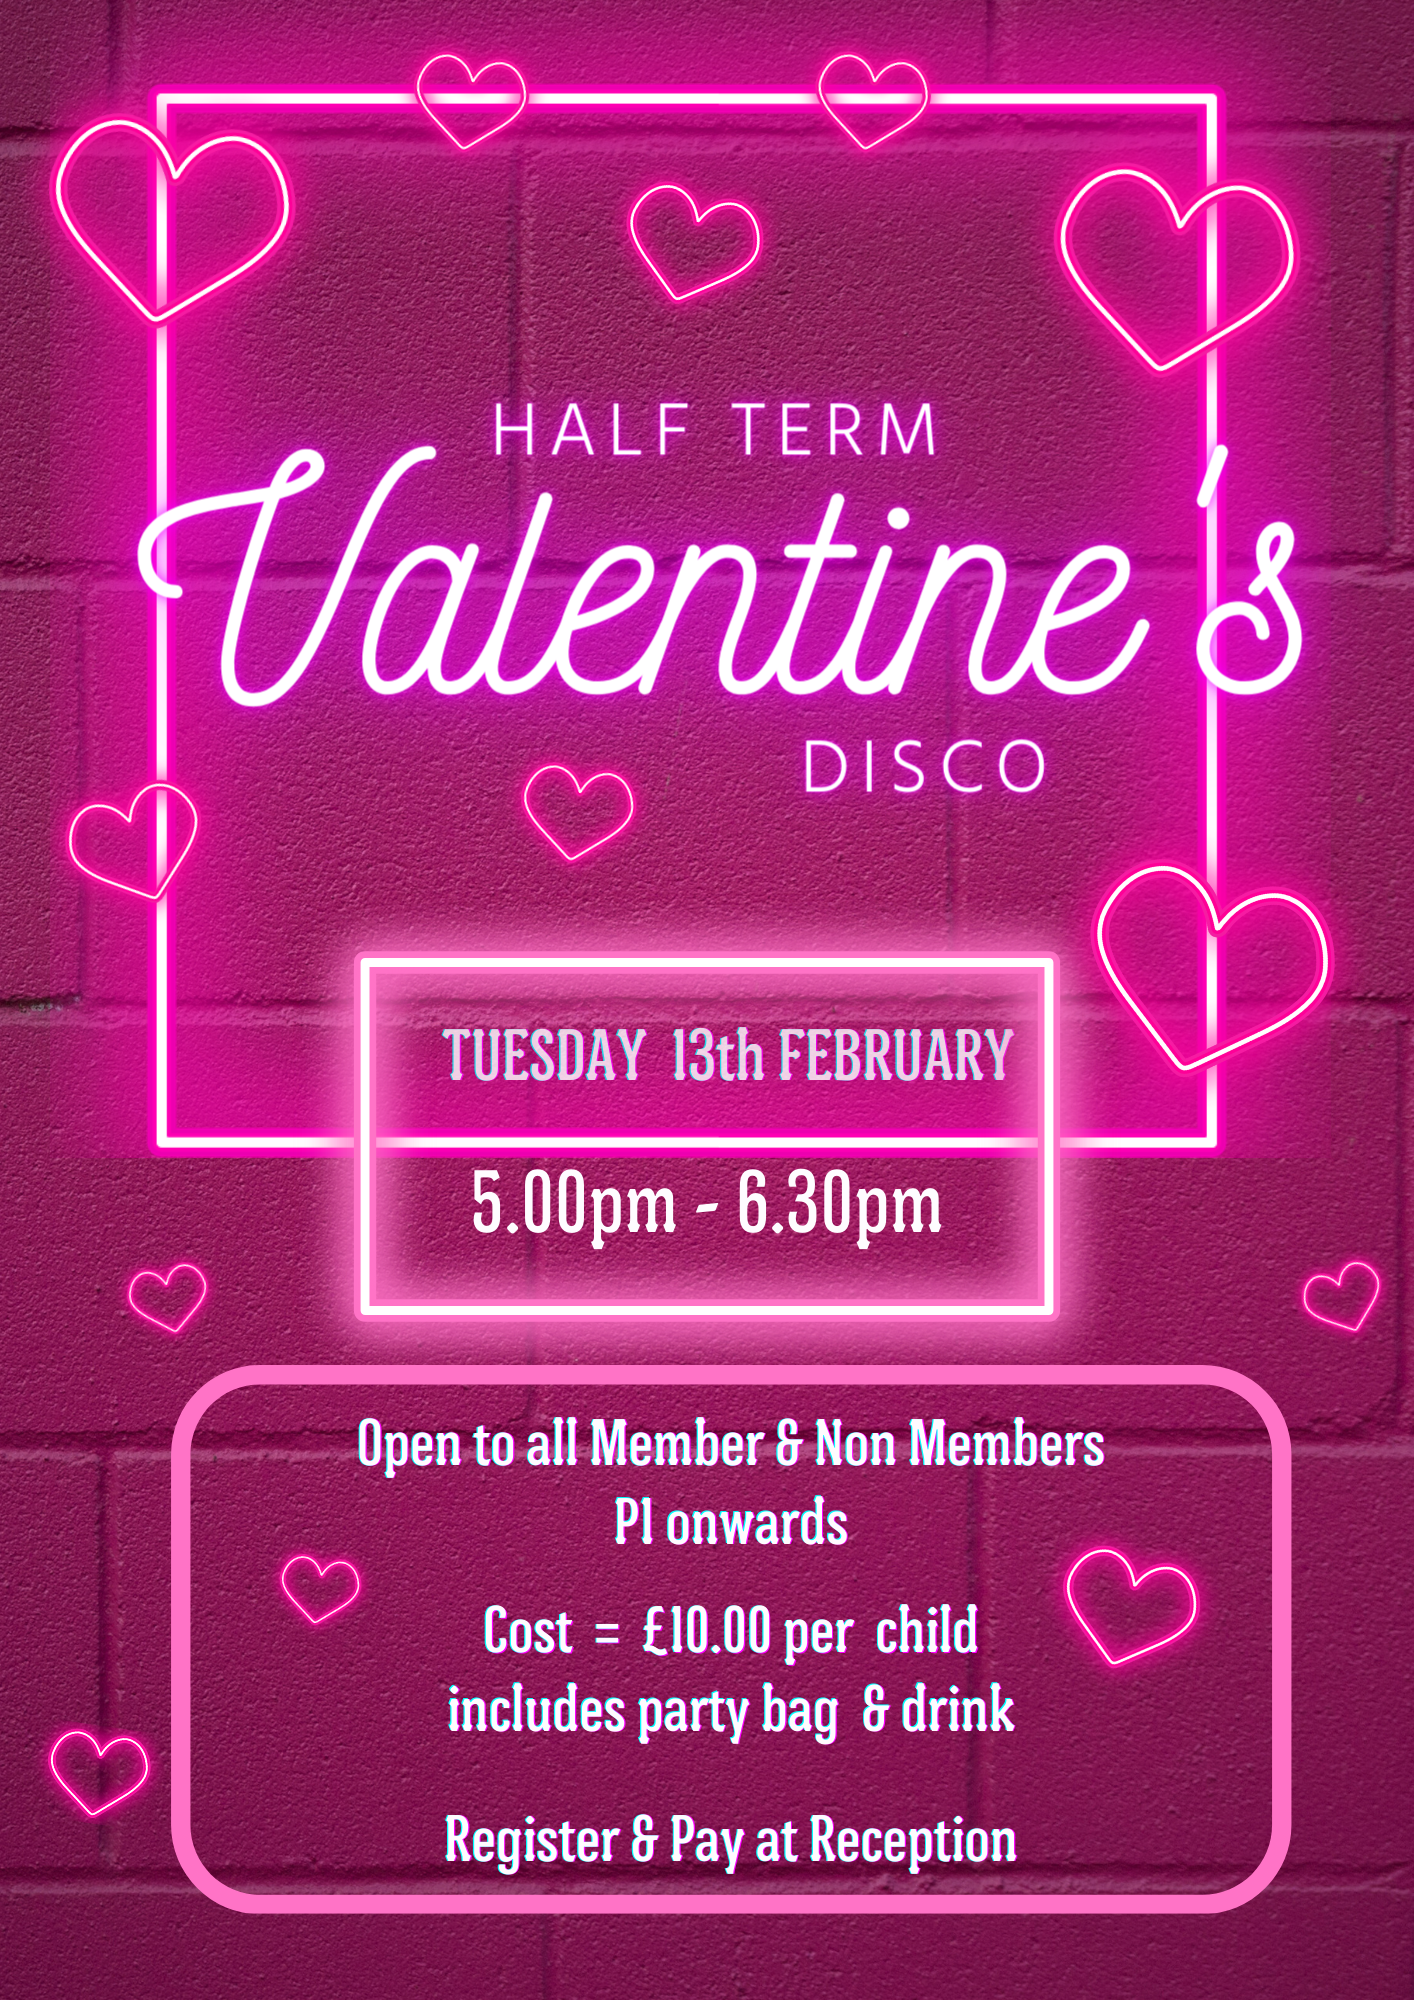 Valentine disco poster